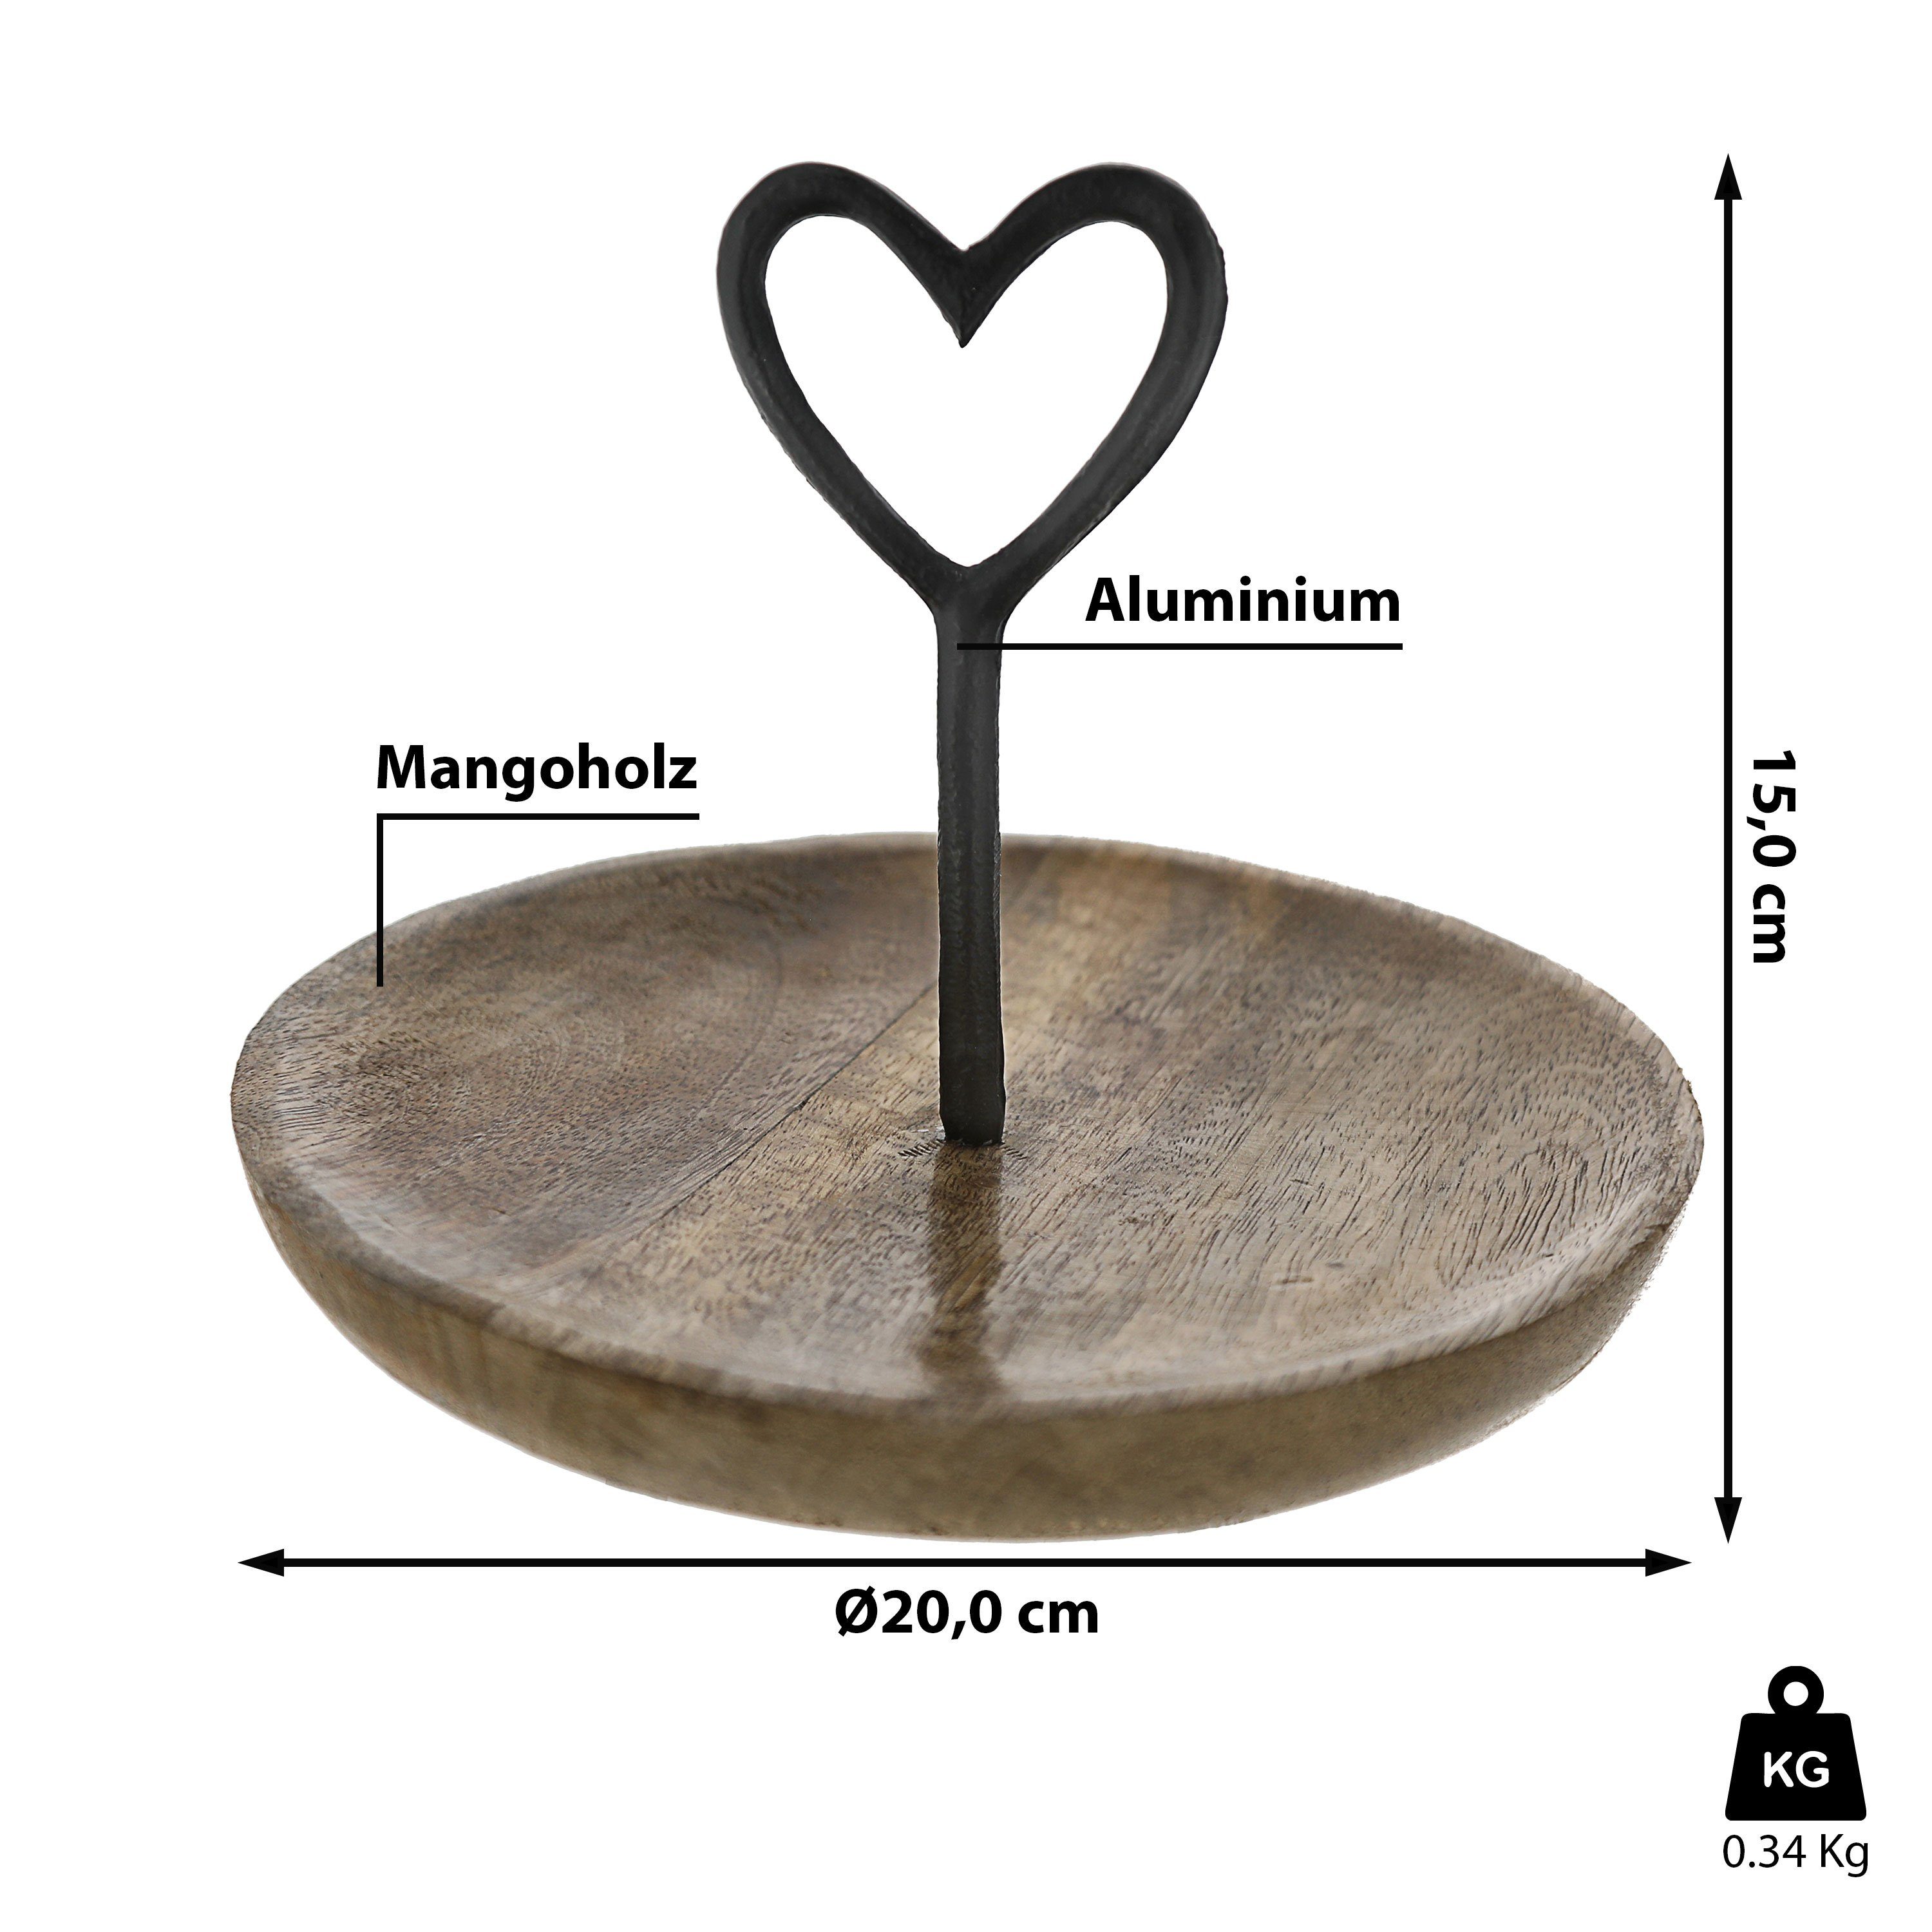 Herzgriff CEPEWA Mangoholz Metall Dekoteller natur Schale schwarz Etagere 20x15cm Teller